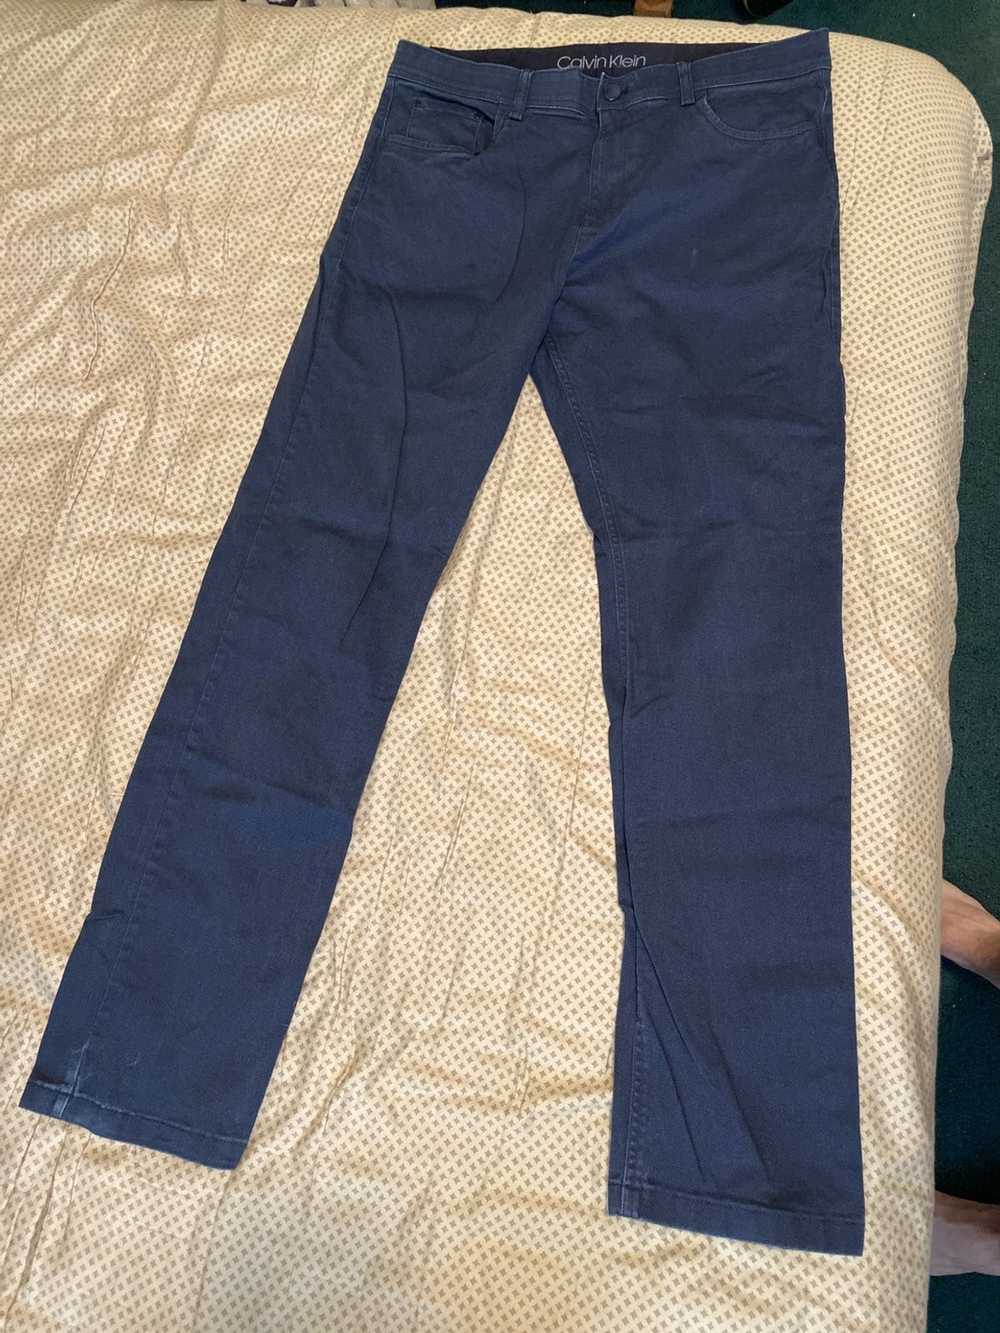 Calvin Klein Calvin Klein stretchy jeans 2 pairs … - image 7